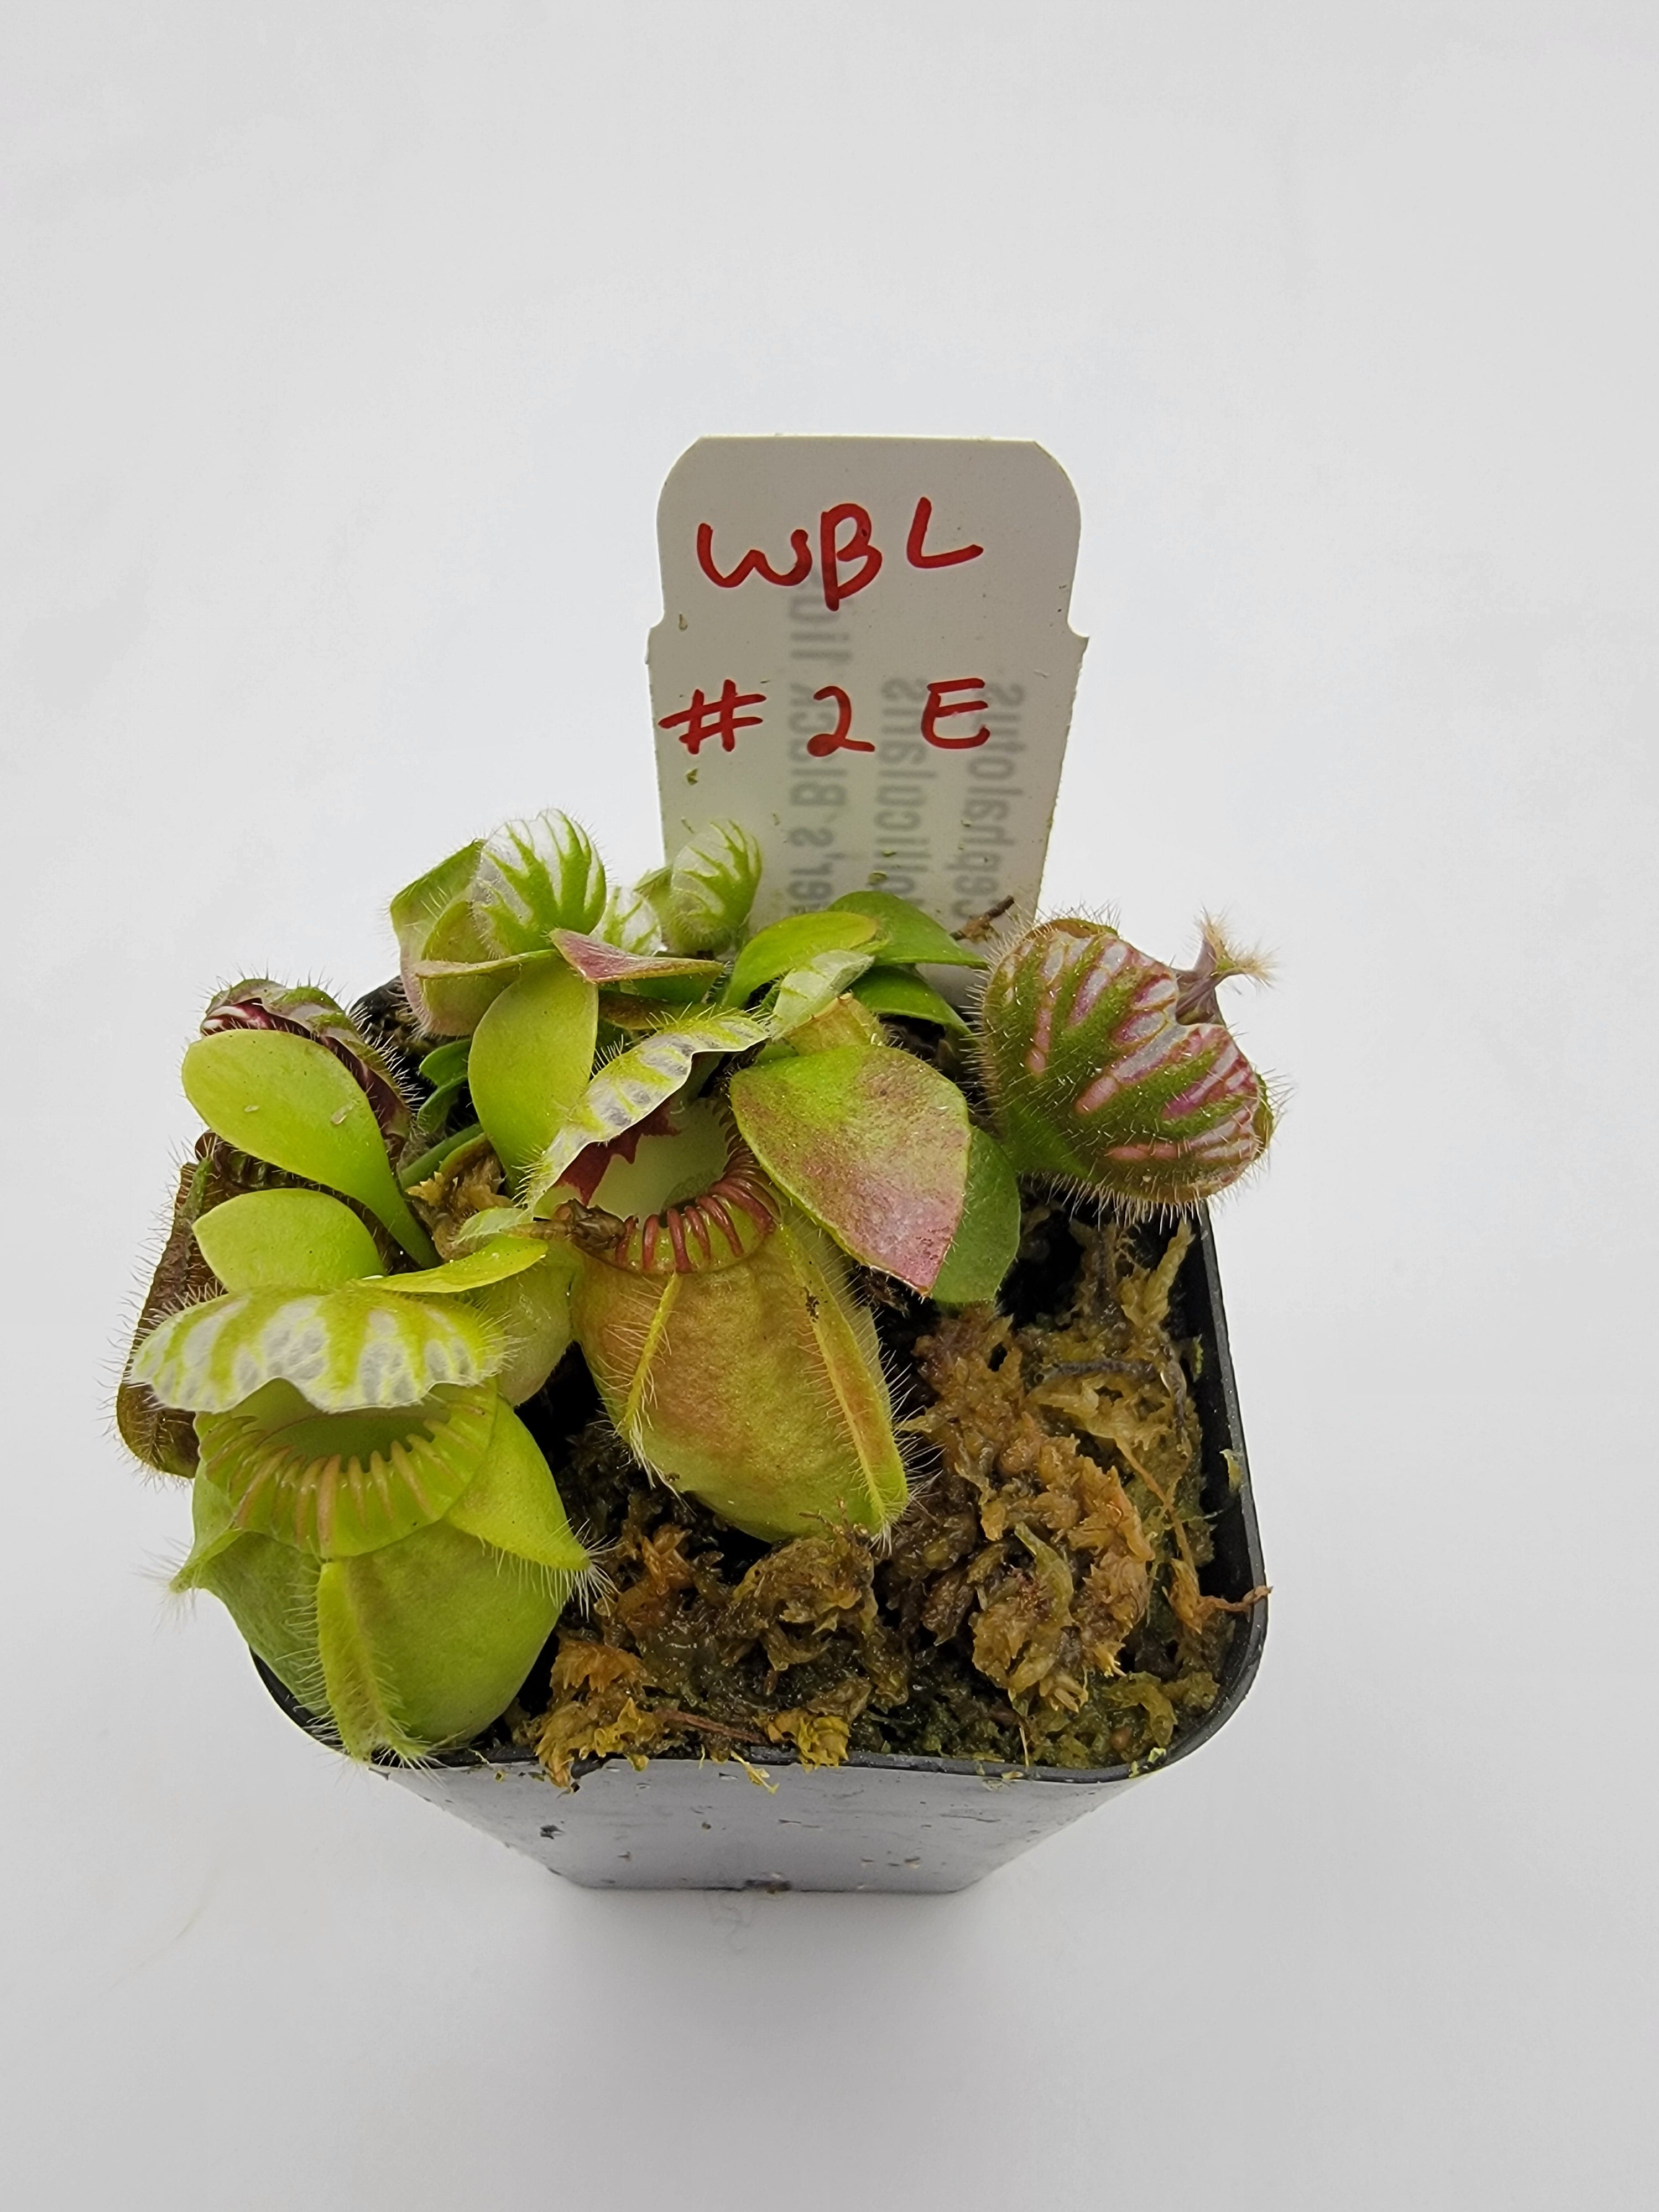 Cephalotus follicularis "Brewer's Black Lids" WBL-(1E-10E) - Rainbow Carnivorous Plants LLC